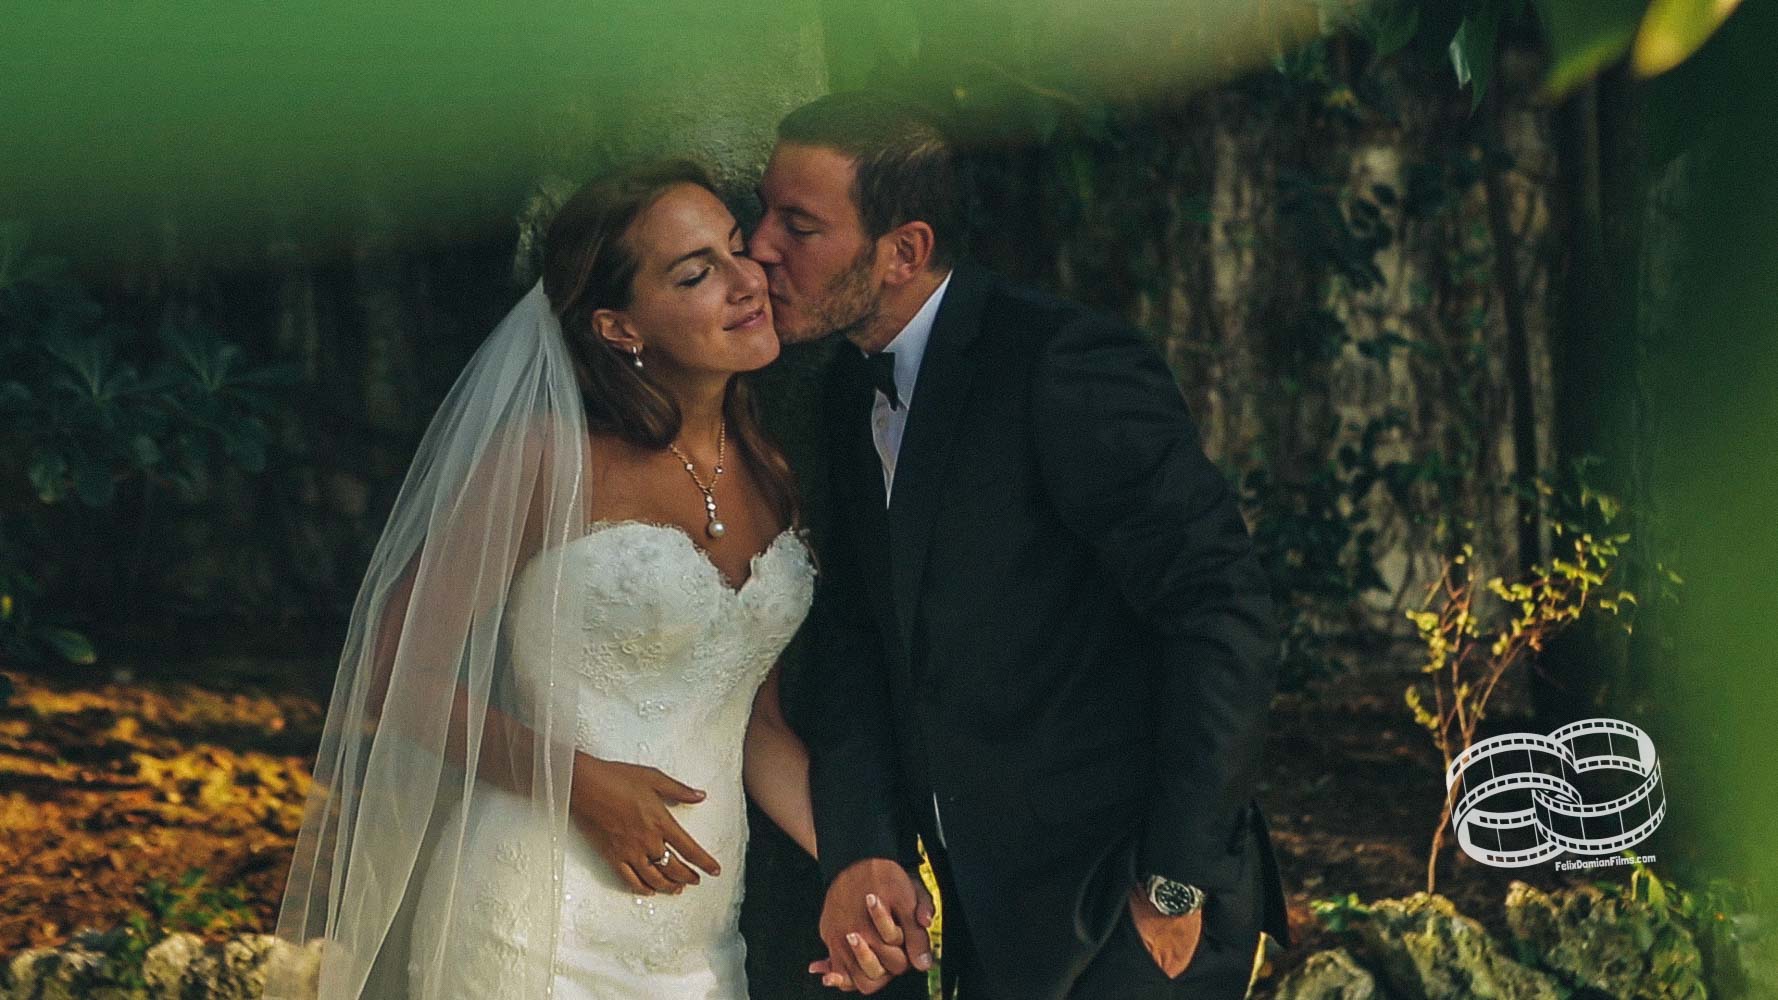 Ilke & Selim – “Love in Madrid” el video de una boda turca